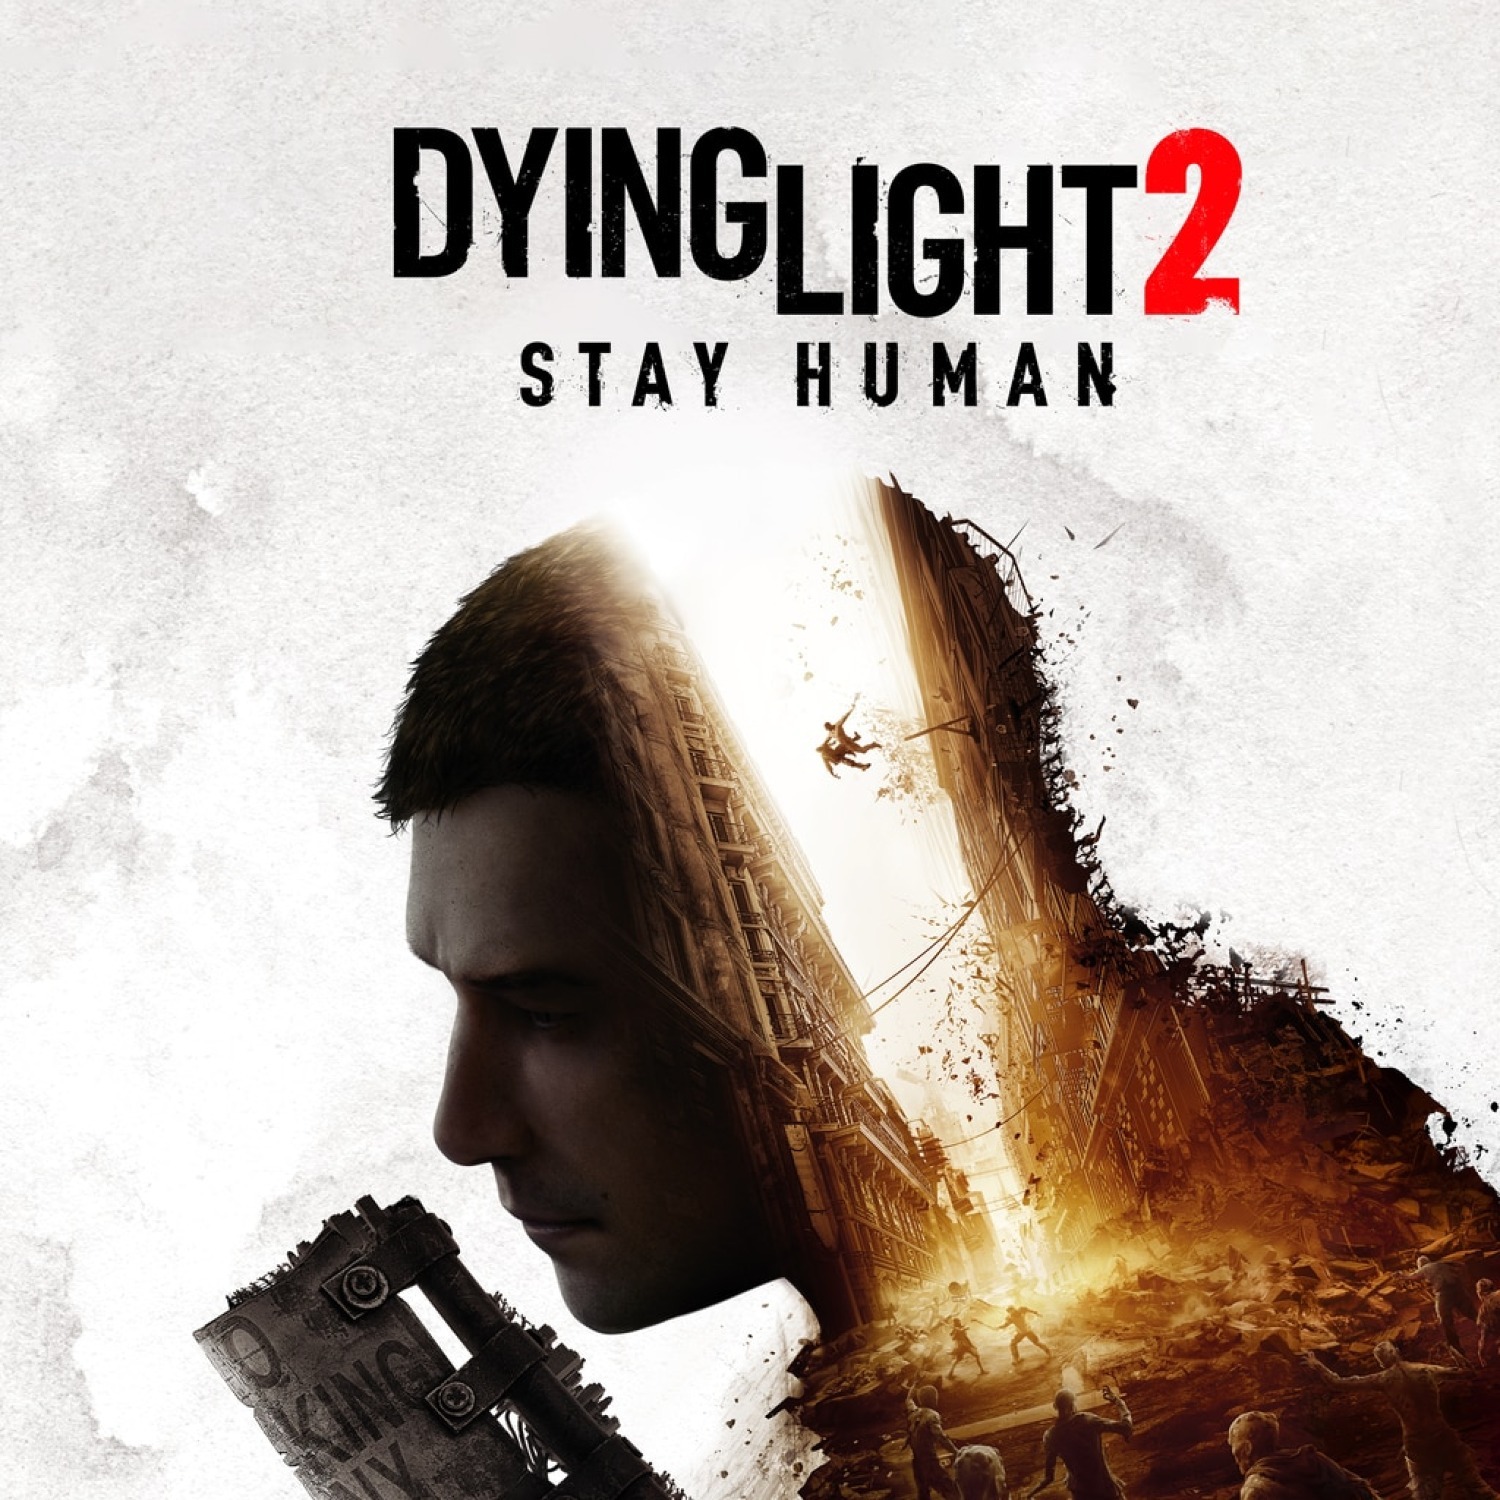 Dying Light 2 (PC Digital Steam Key) $41.07